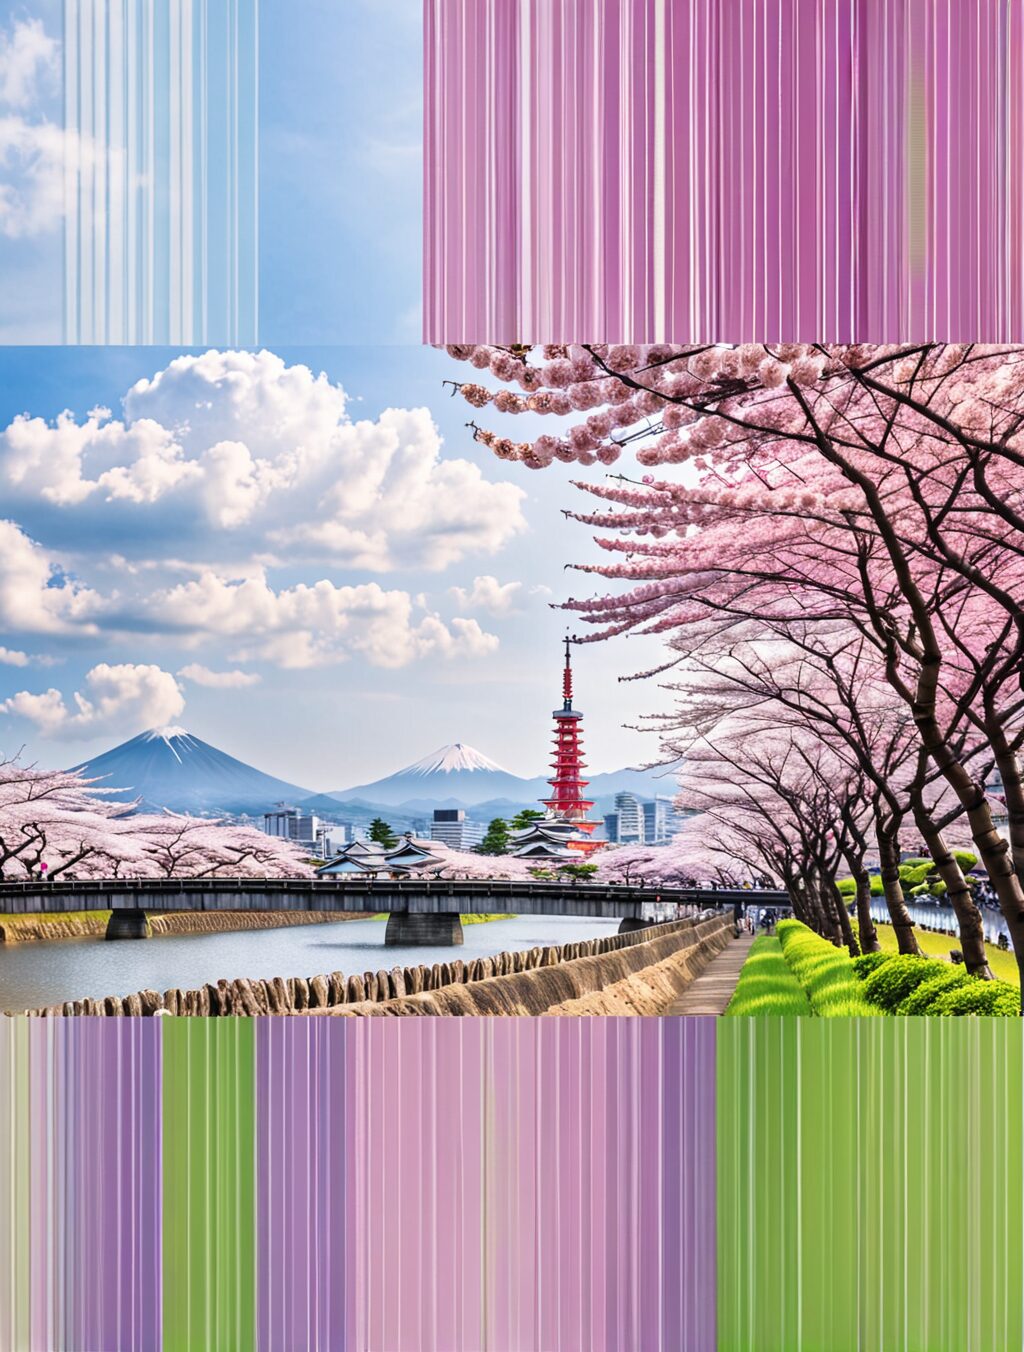 reasons to visit japan in spring